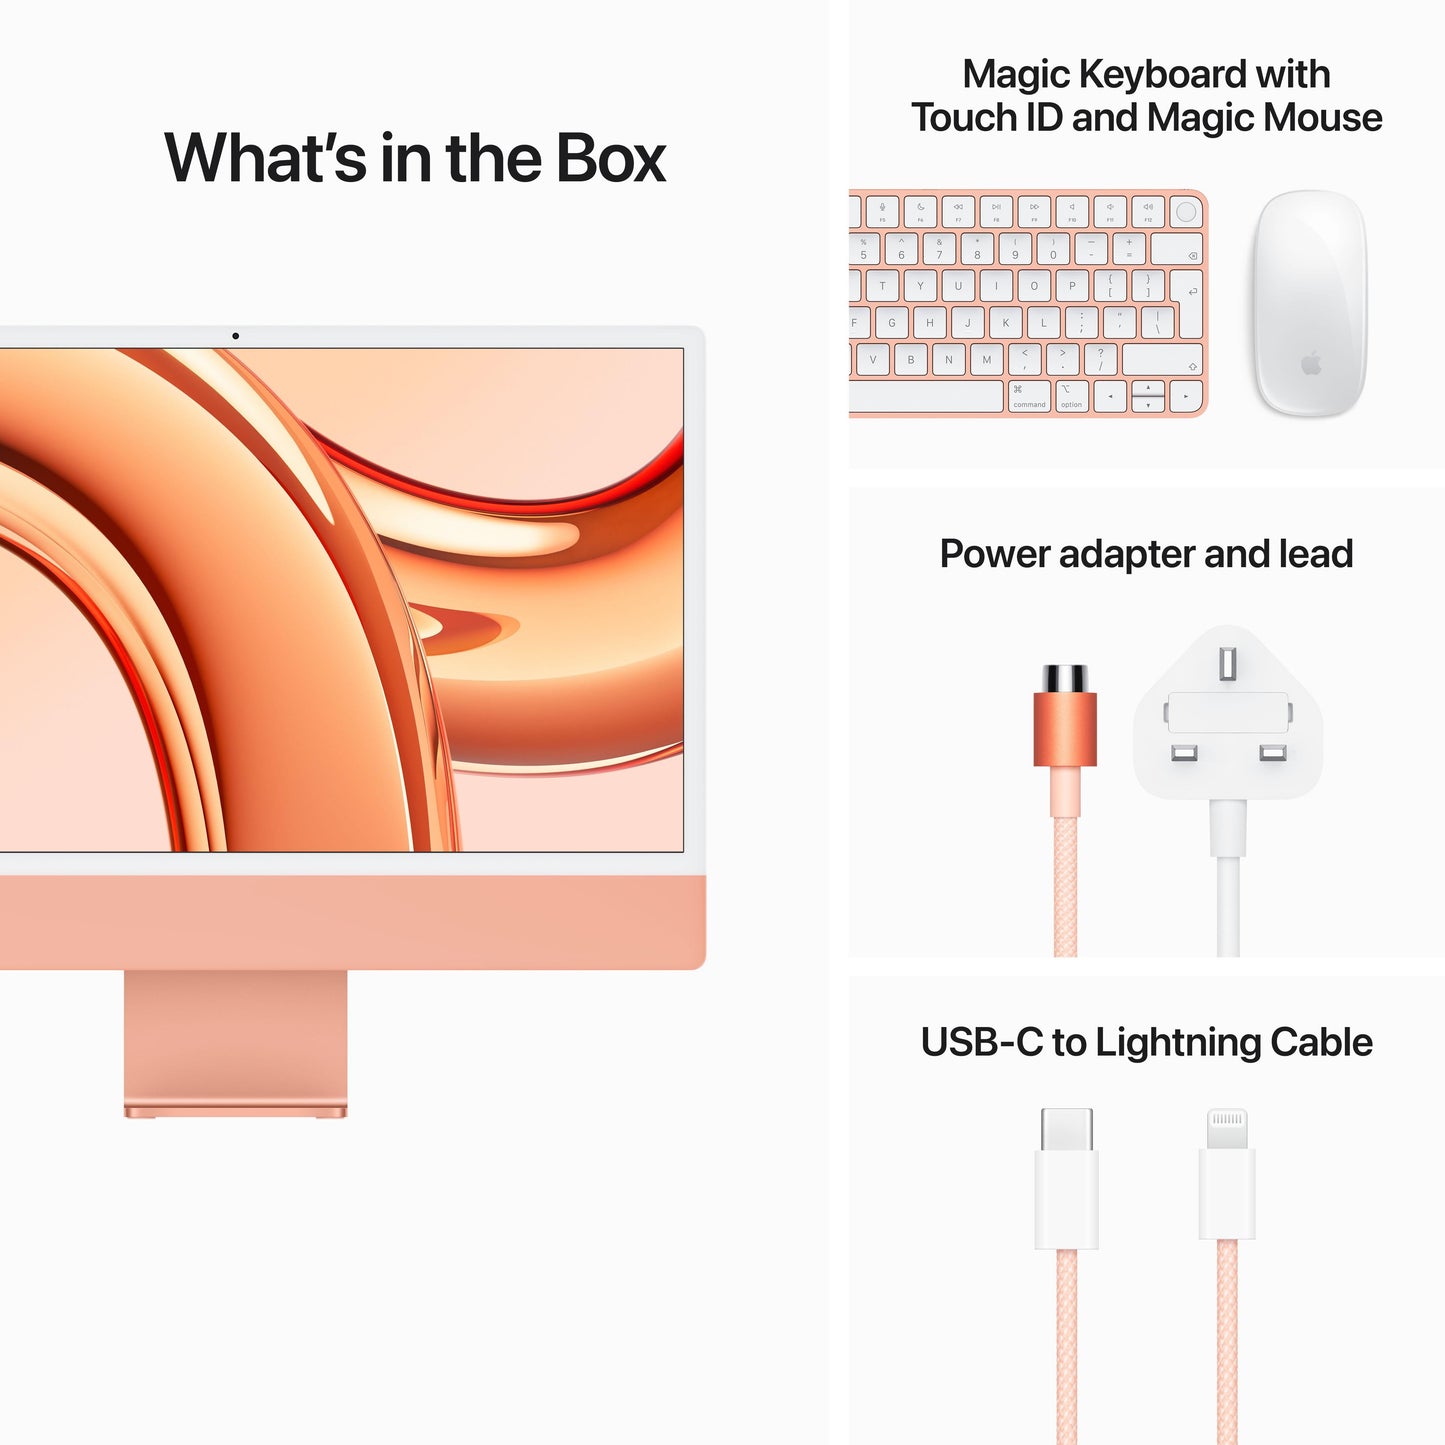 24-inch iMac with Retina 4.5K display: Apple M3 chip with 8‑core CPU and 10‑core GPU, 256GB SSD - Orange